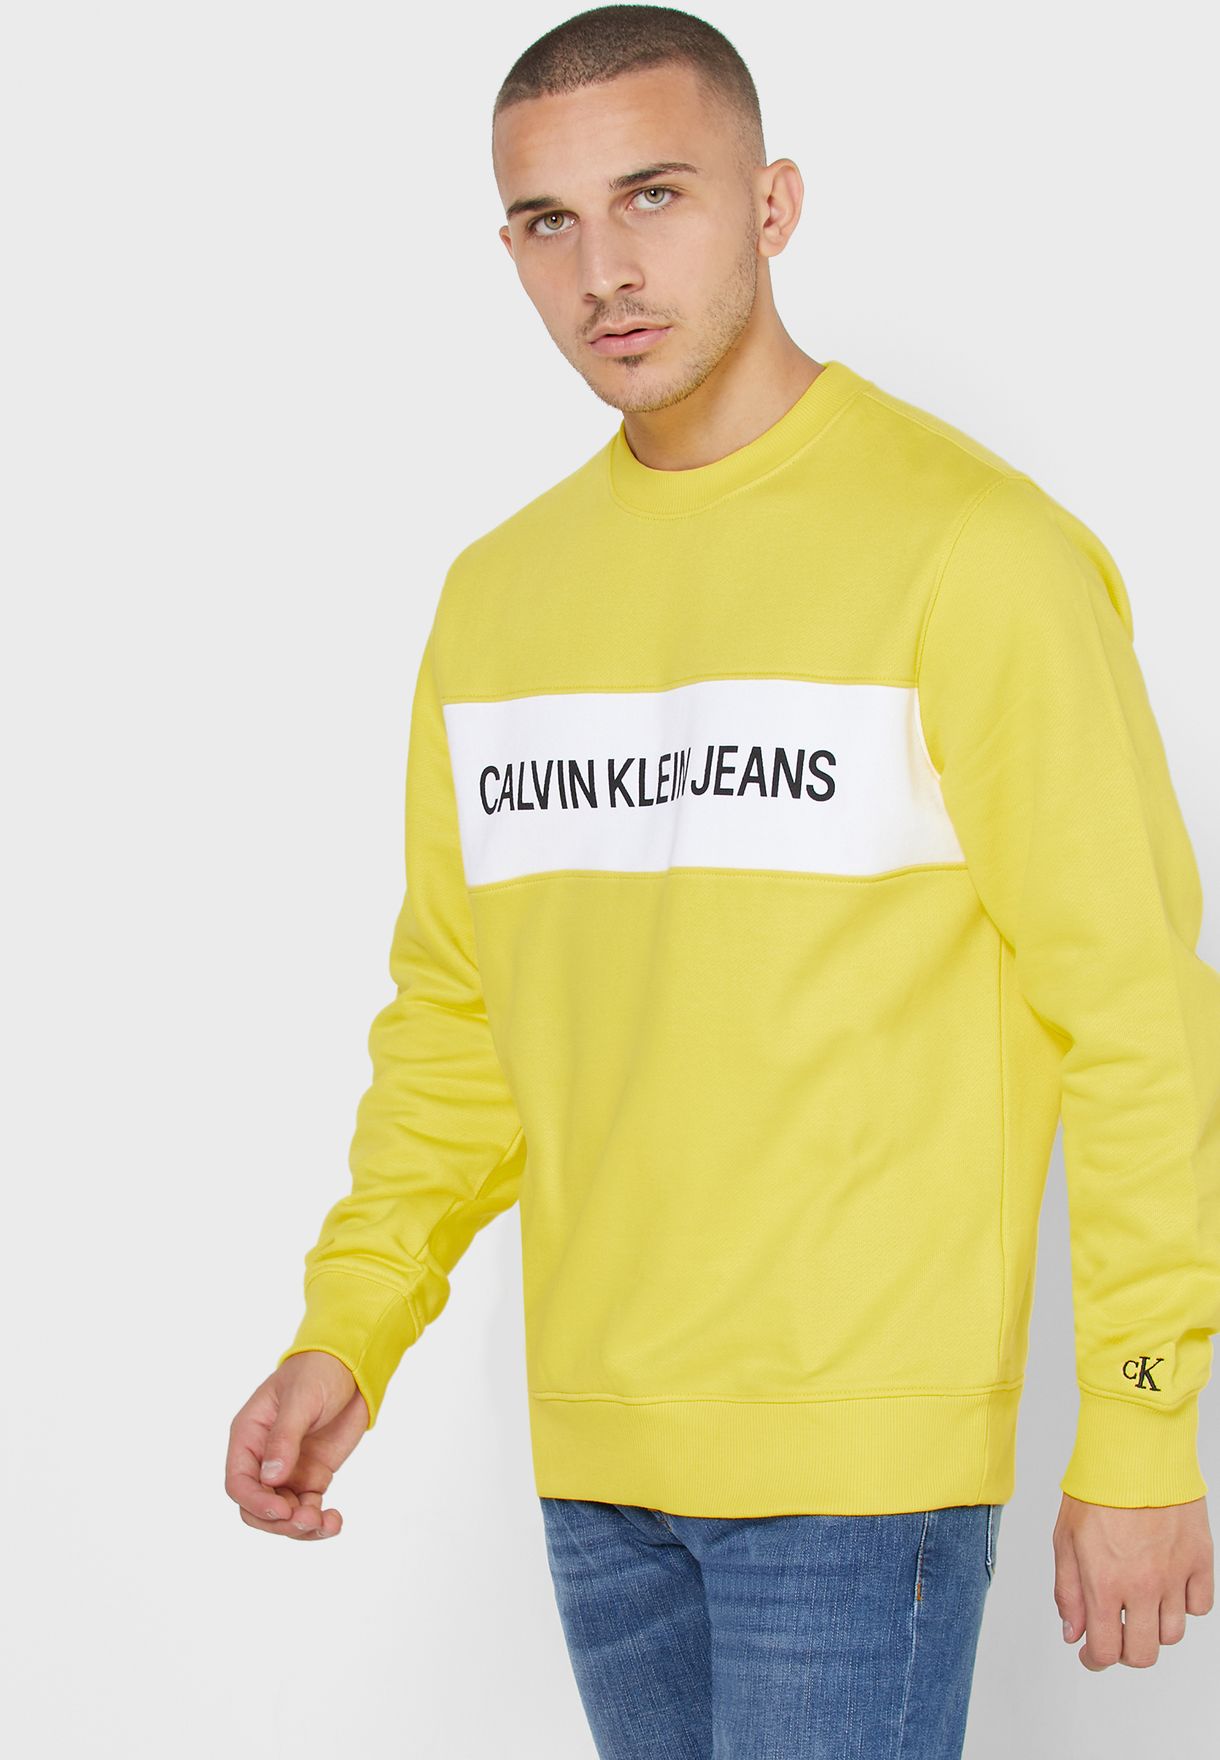 calvin klein sweatshirt yellow